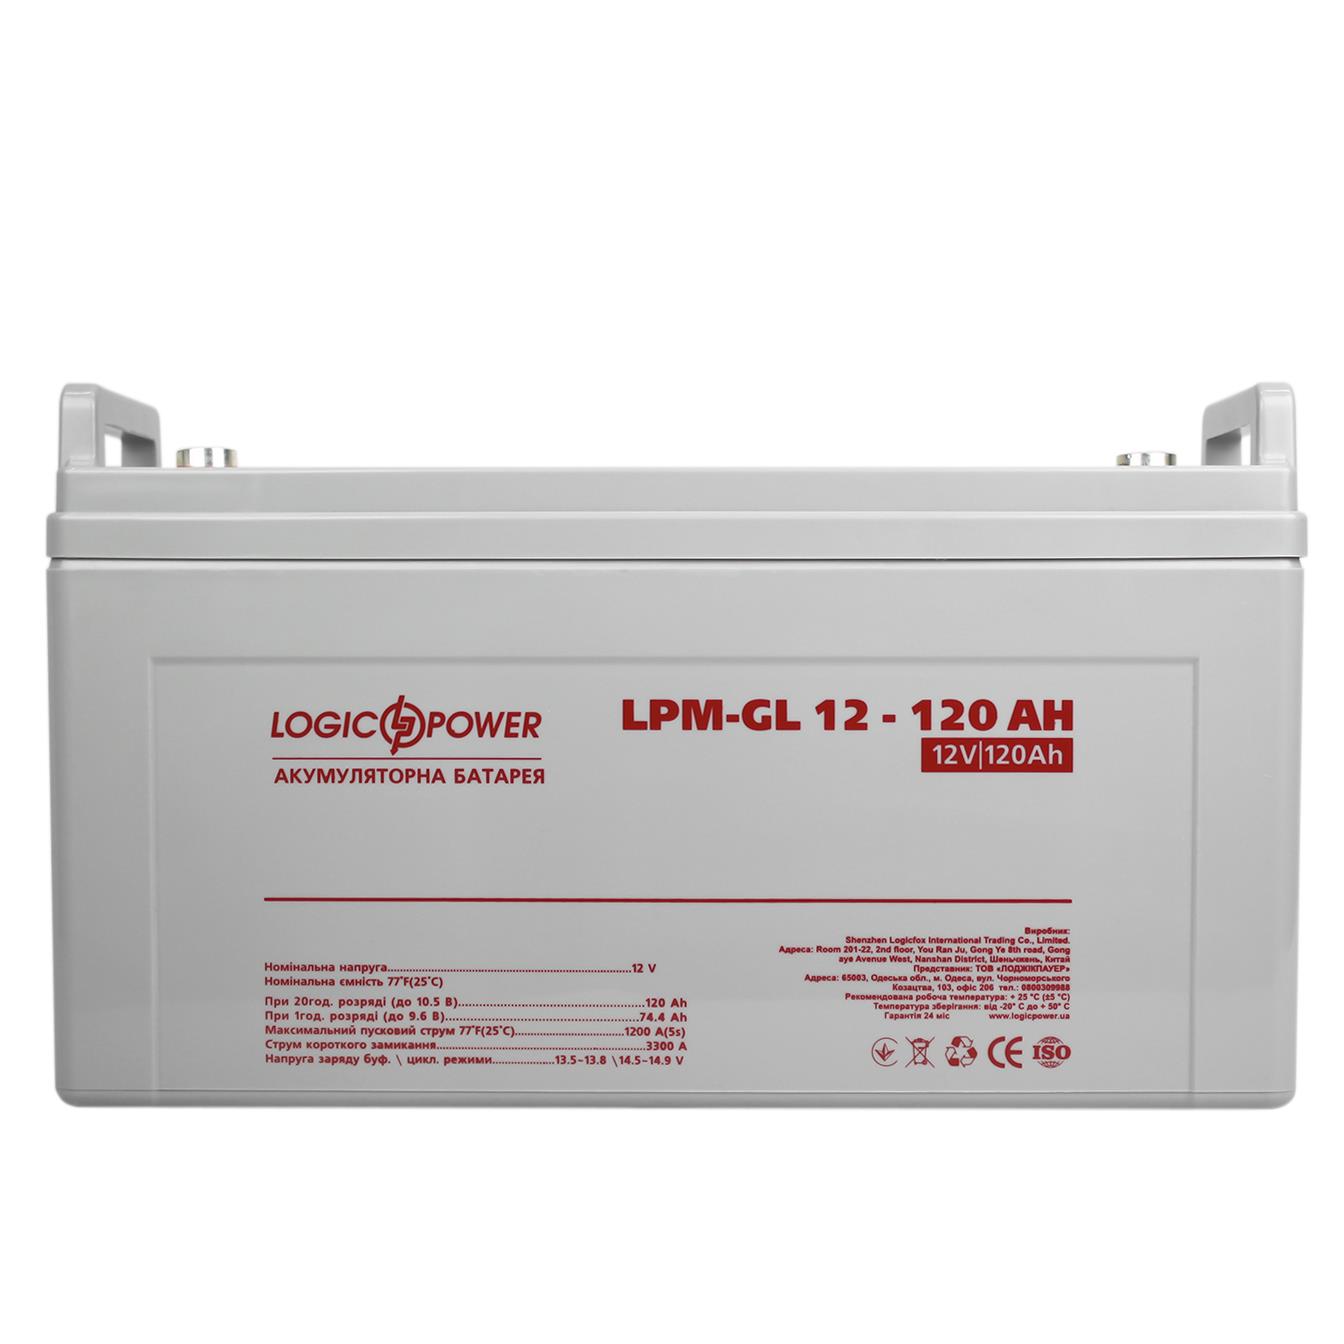 продаём LogicPower LPM-GL 12V - 120 Ah (3870) в Украине - фото 4